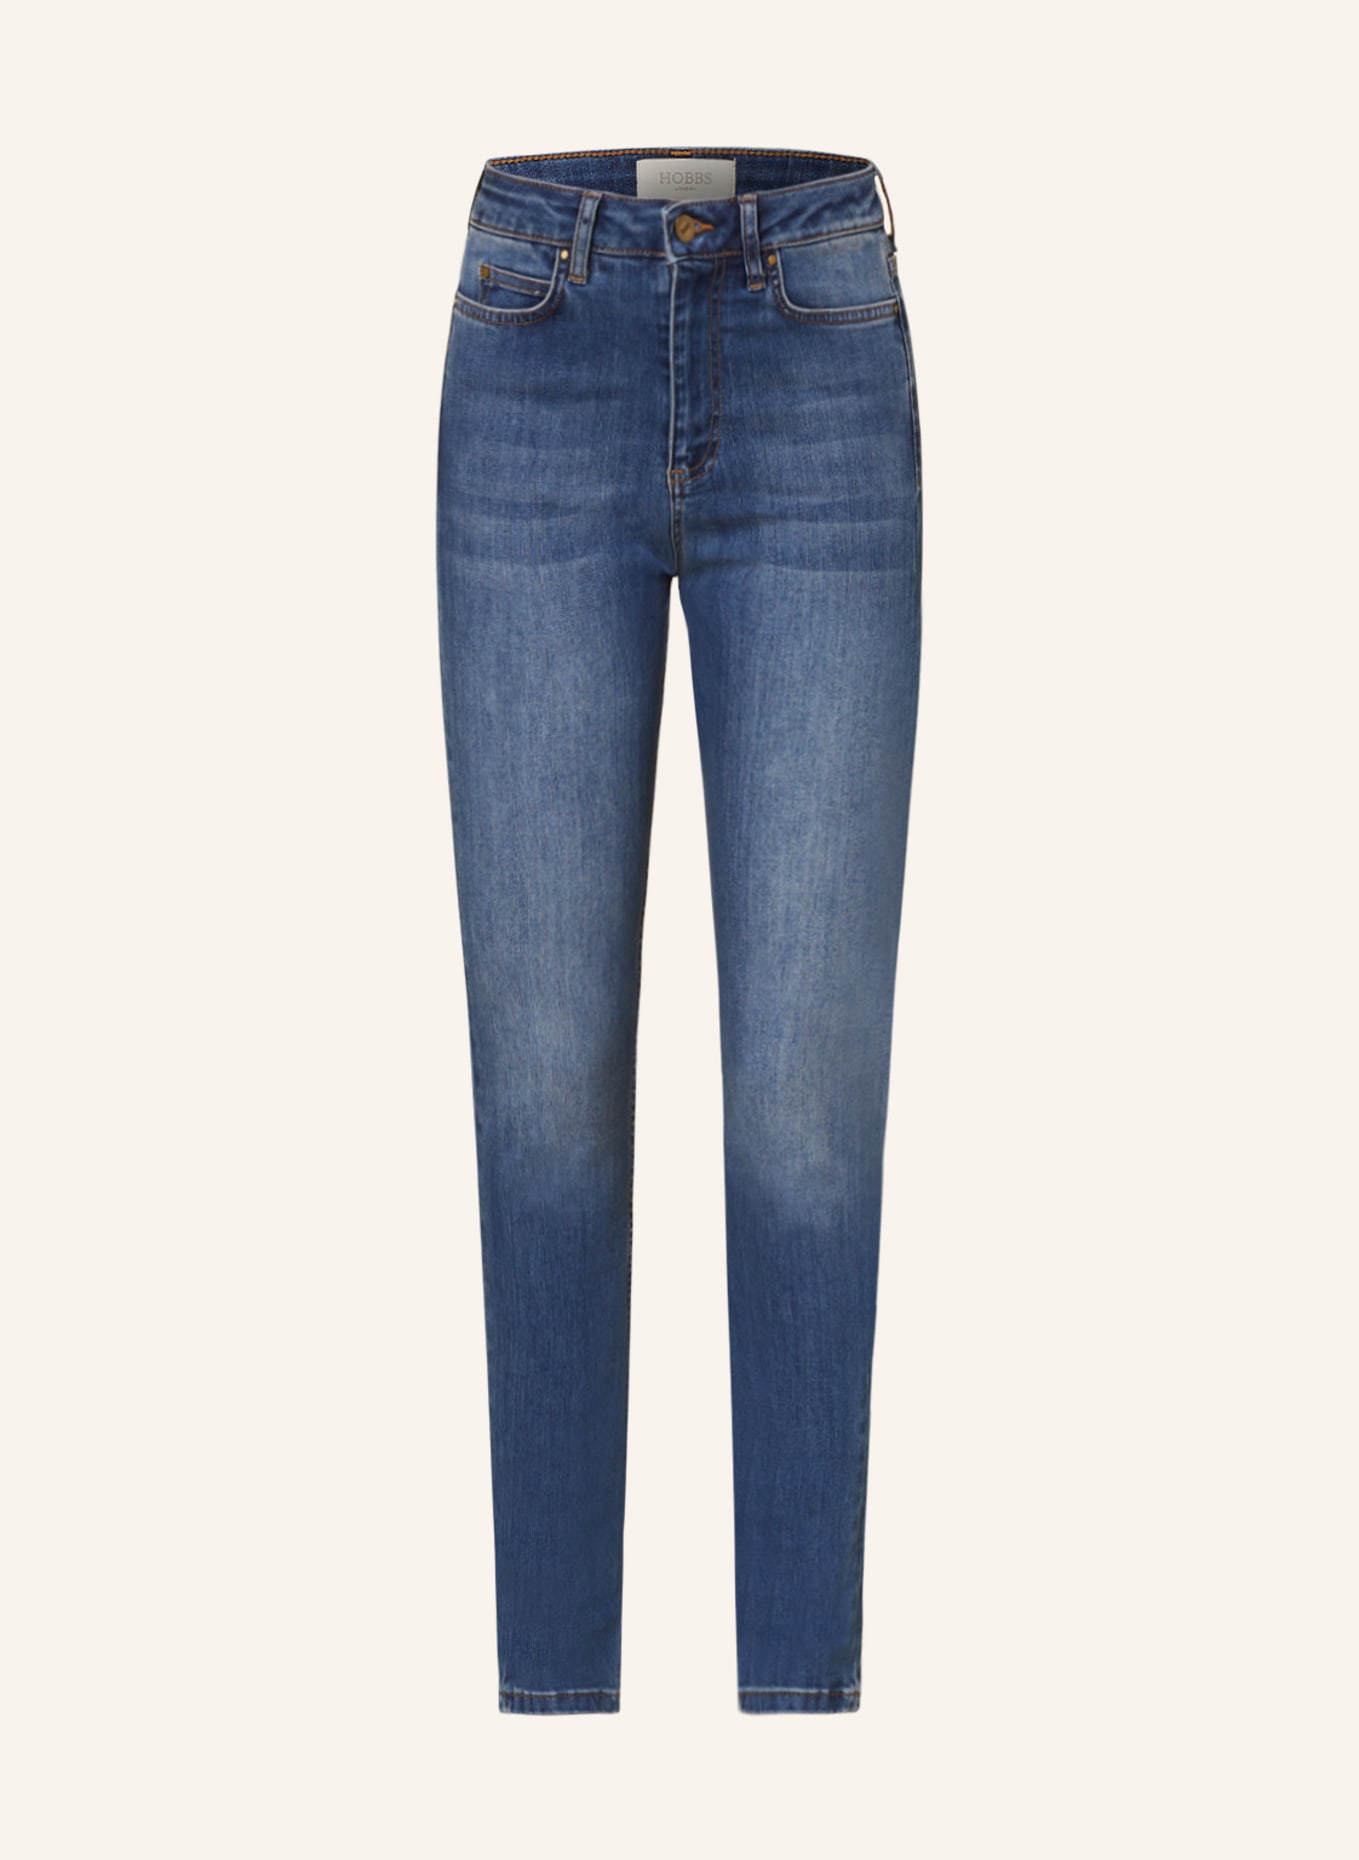 HOBBS Skinny Jeans GIA, Farbe: MID WASH(Bild null)